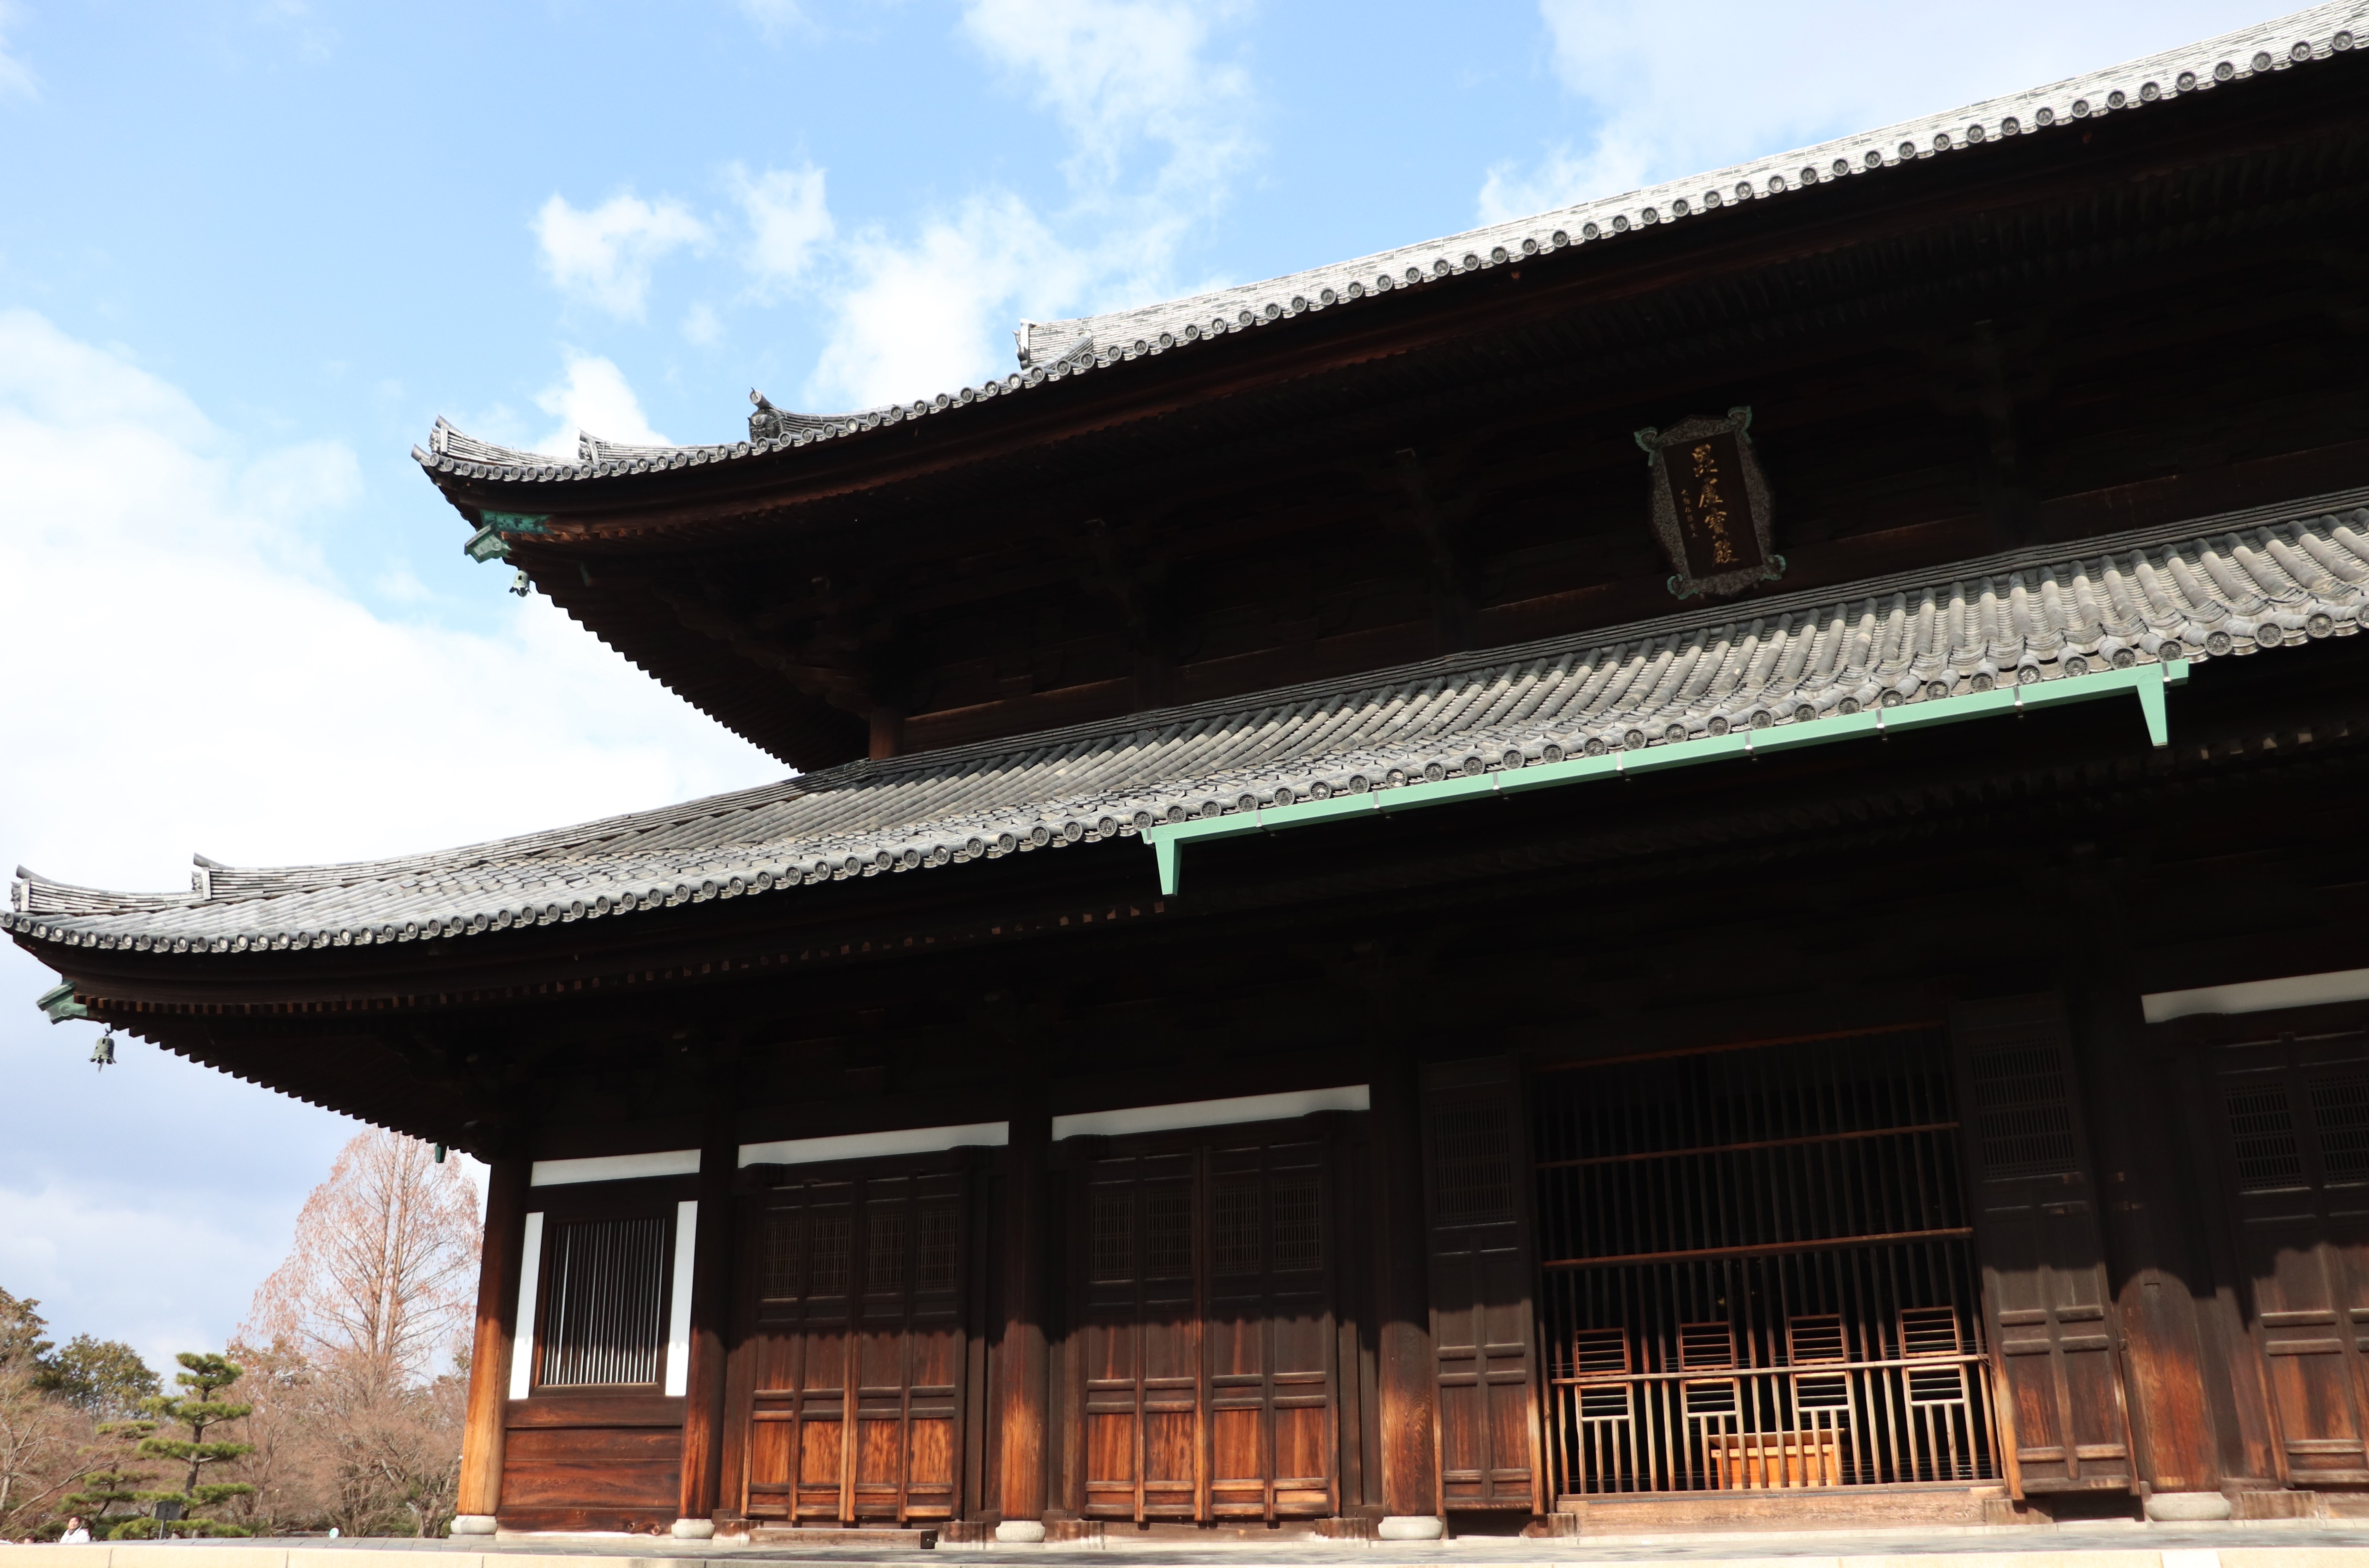 hondo of tofuku-ji temple in Kyoto